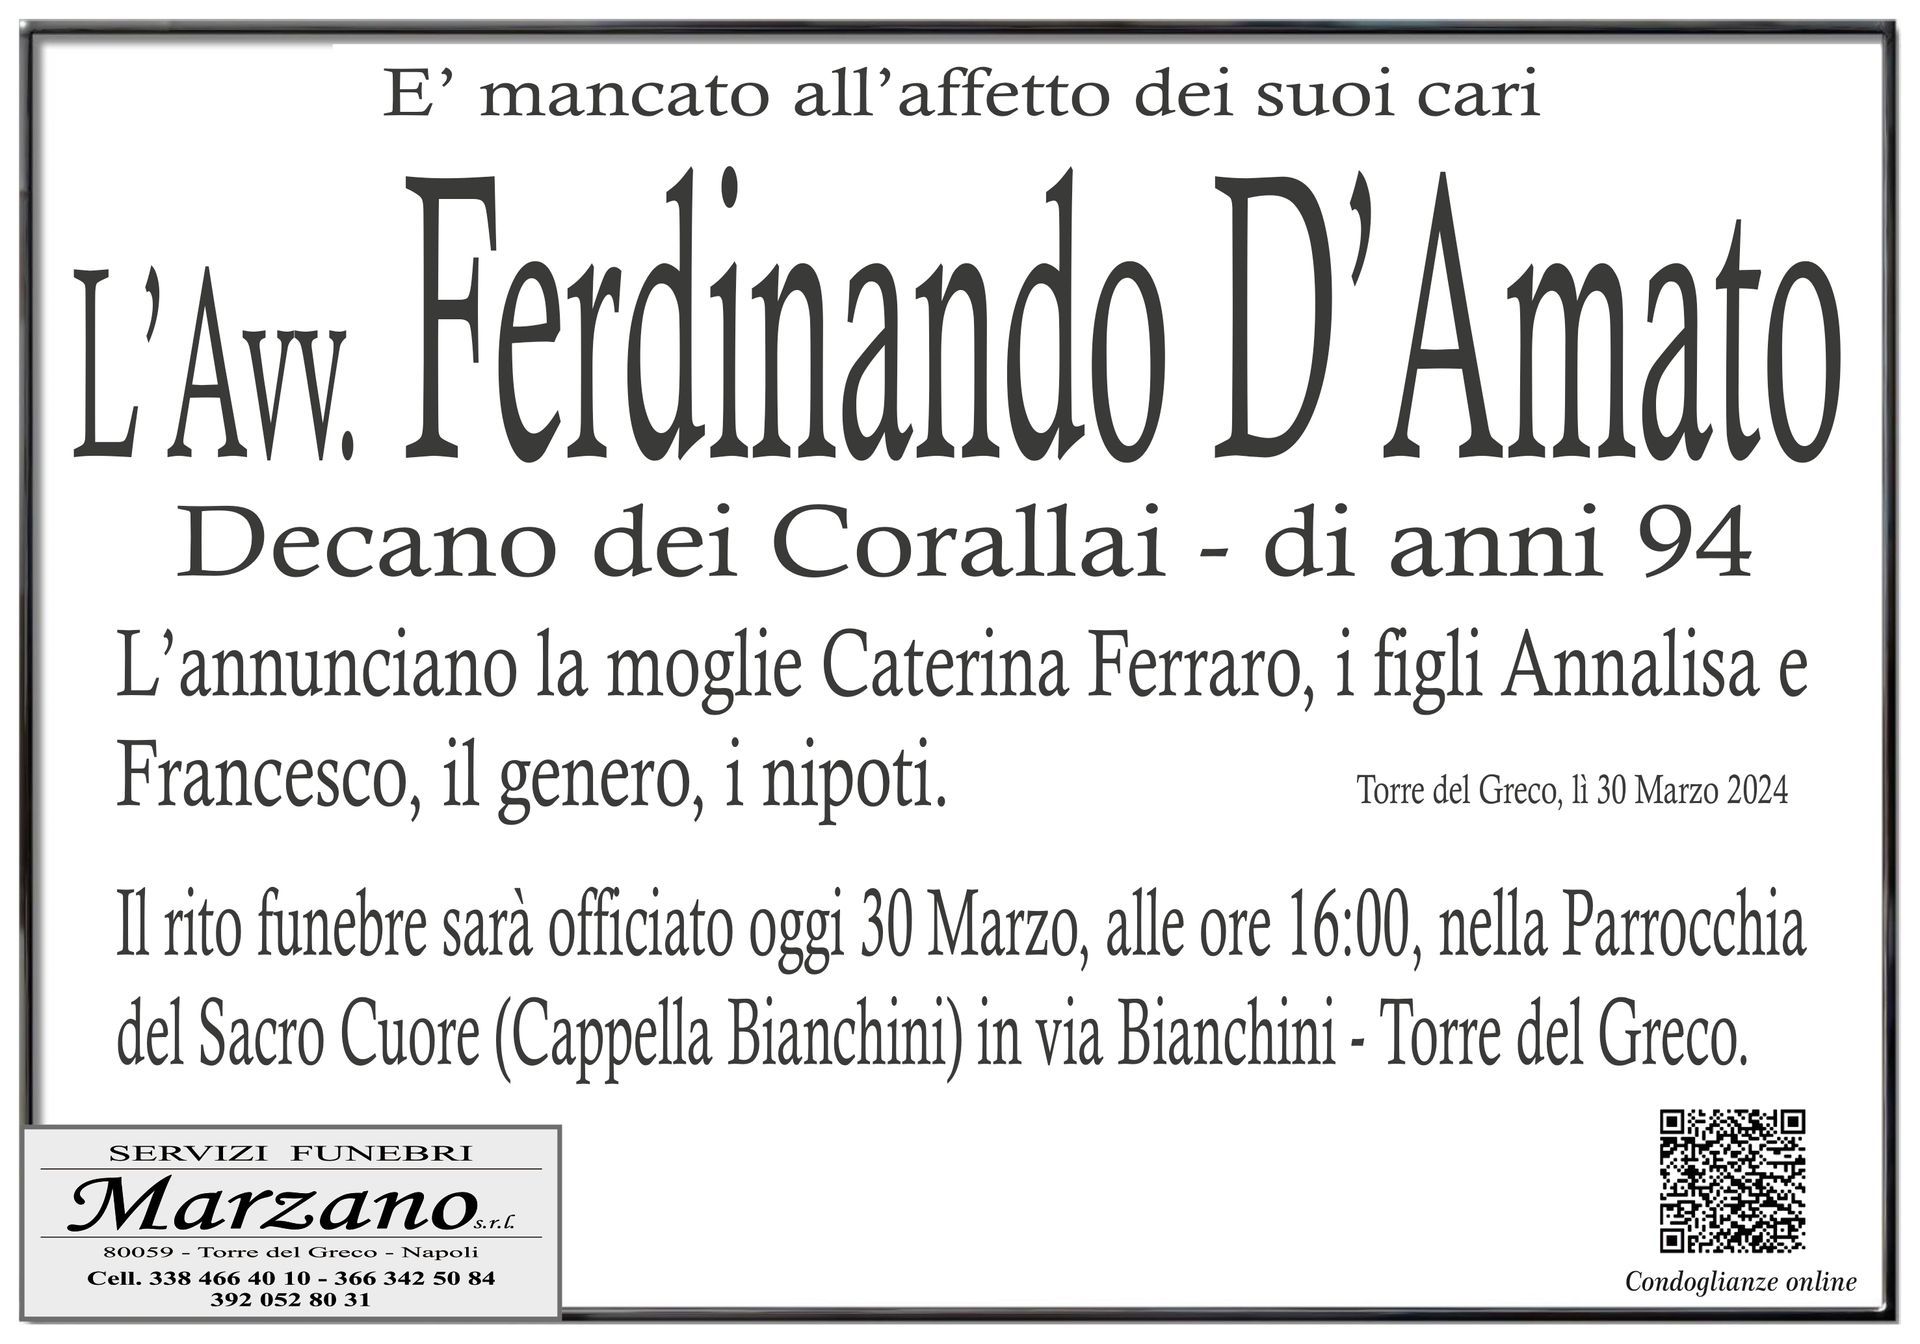 Avv. Ferdinando D' Amato